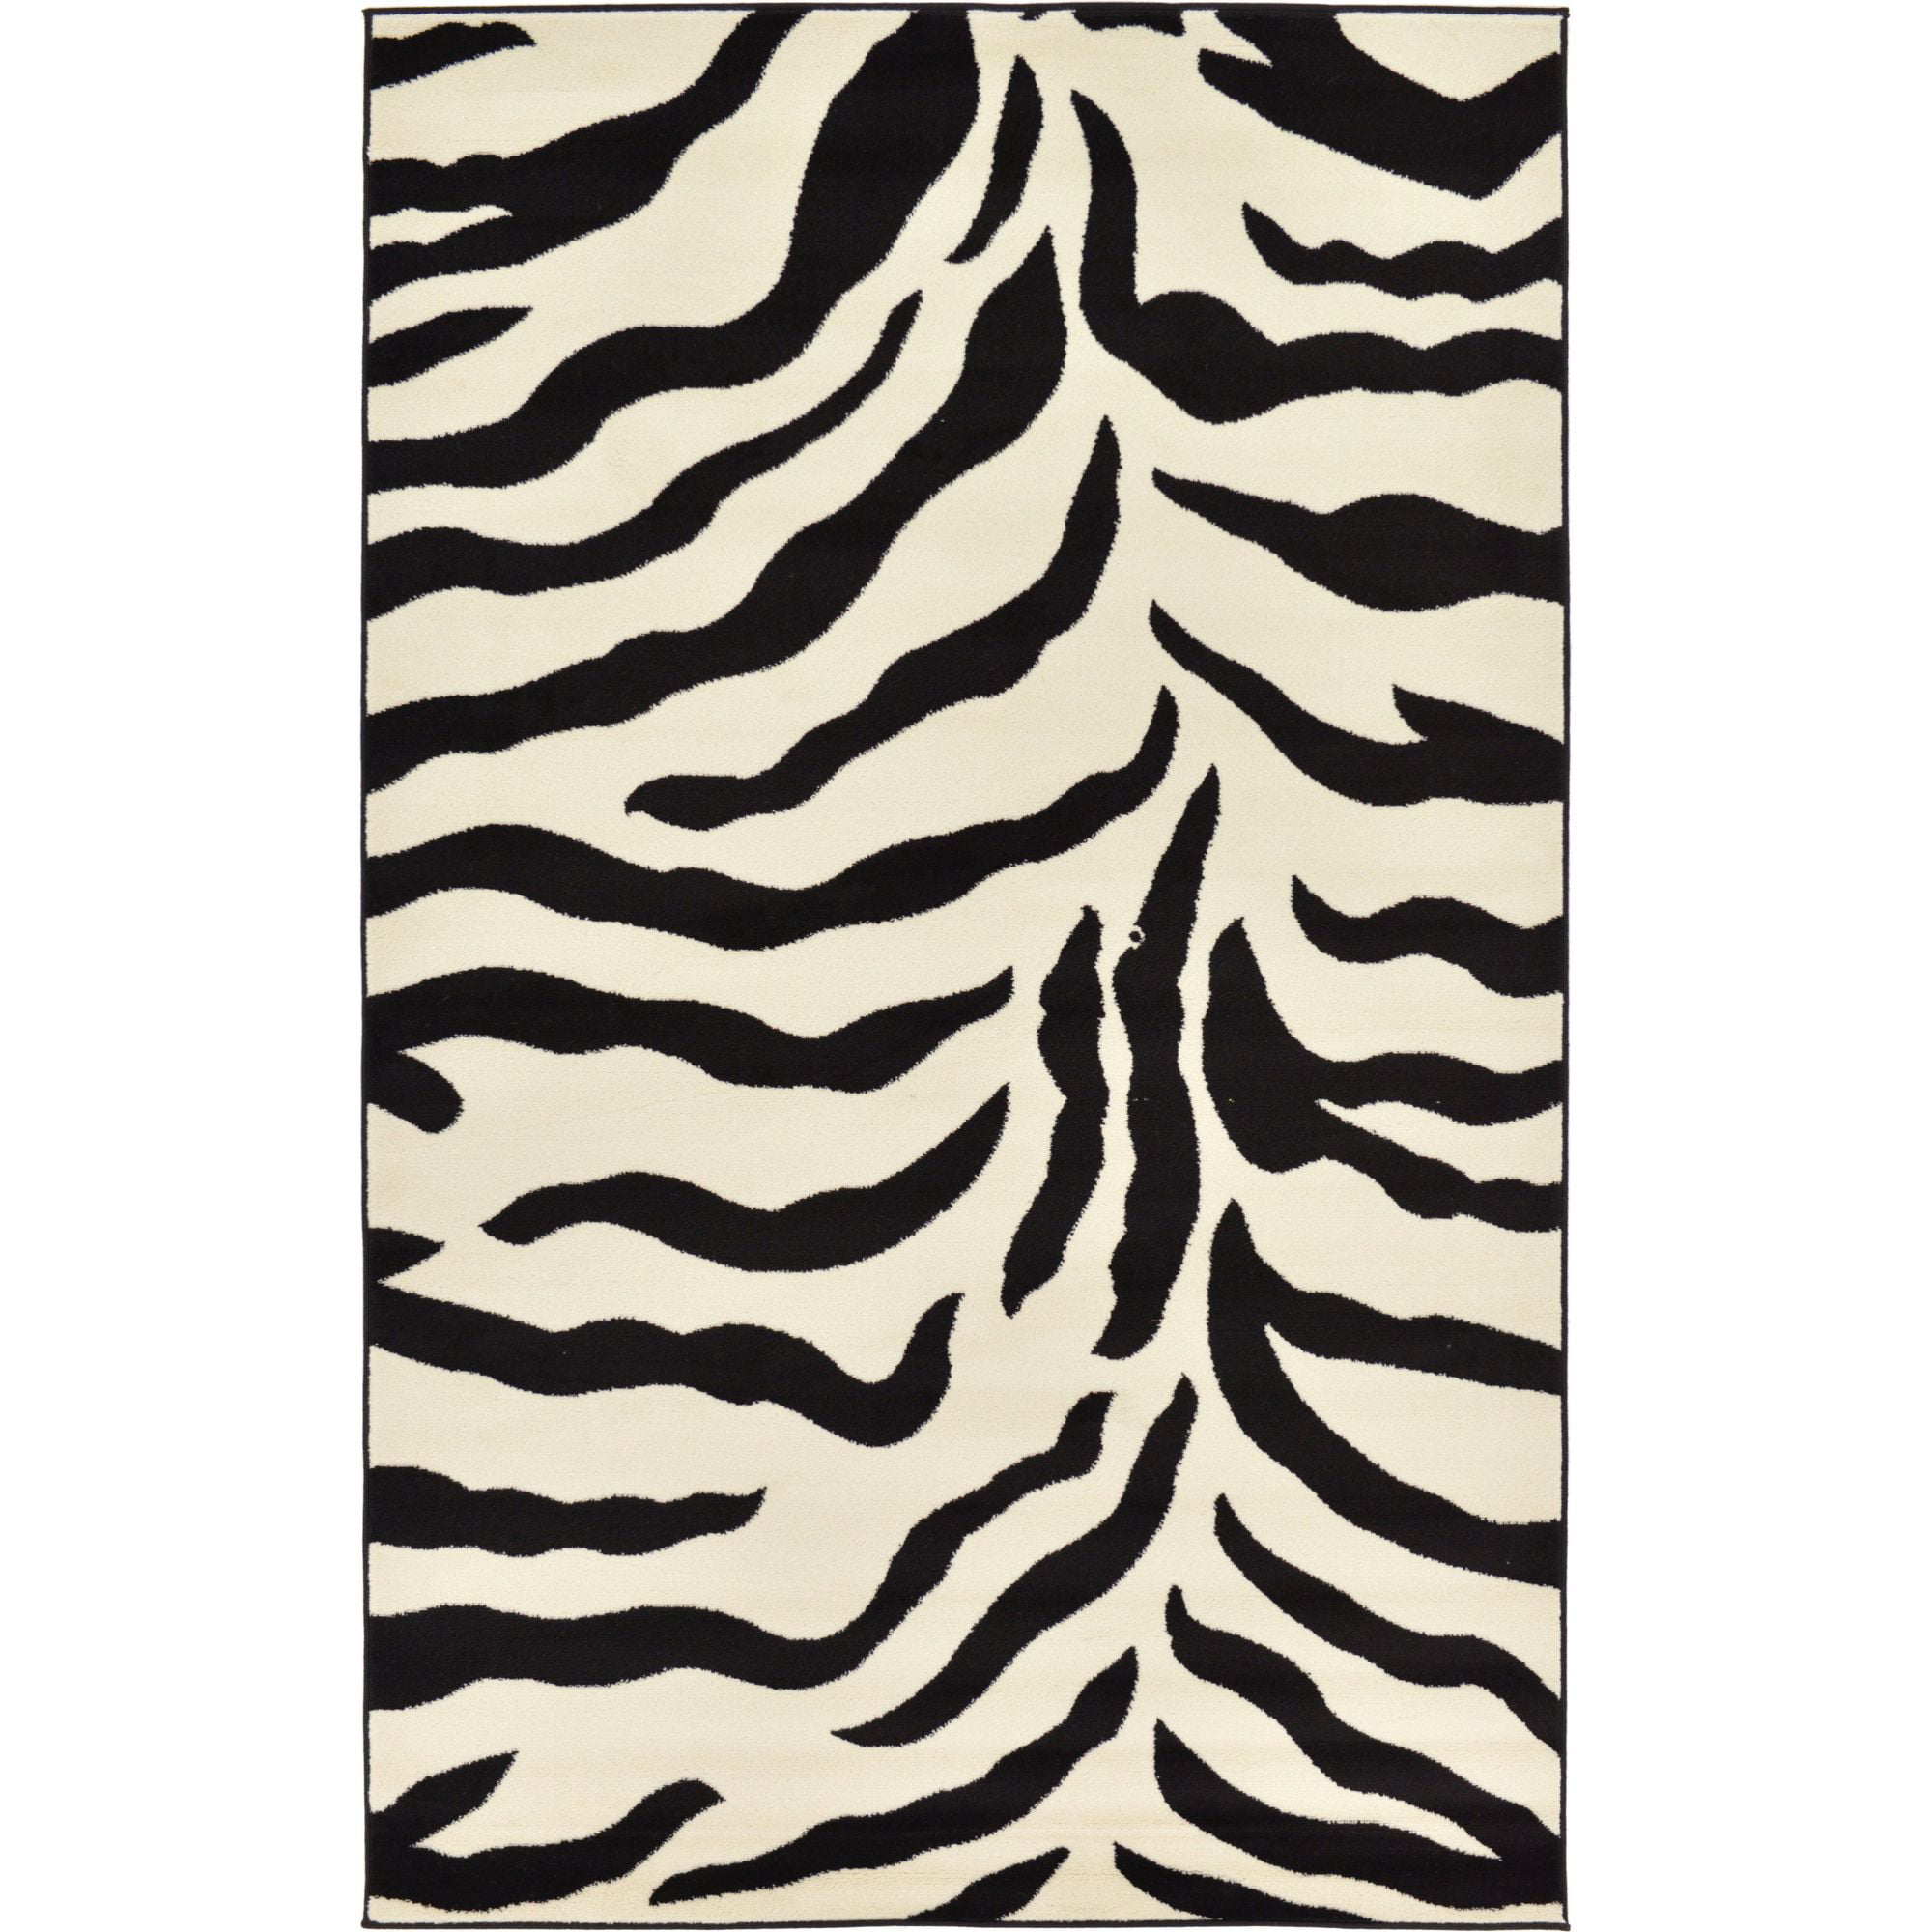 New Black And White Zebra Print 7' Round Animal Print Shag Rug 